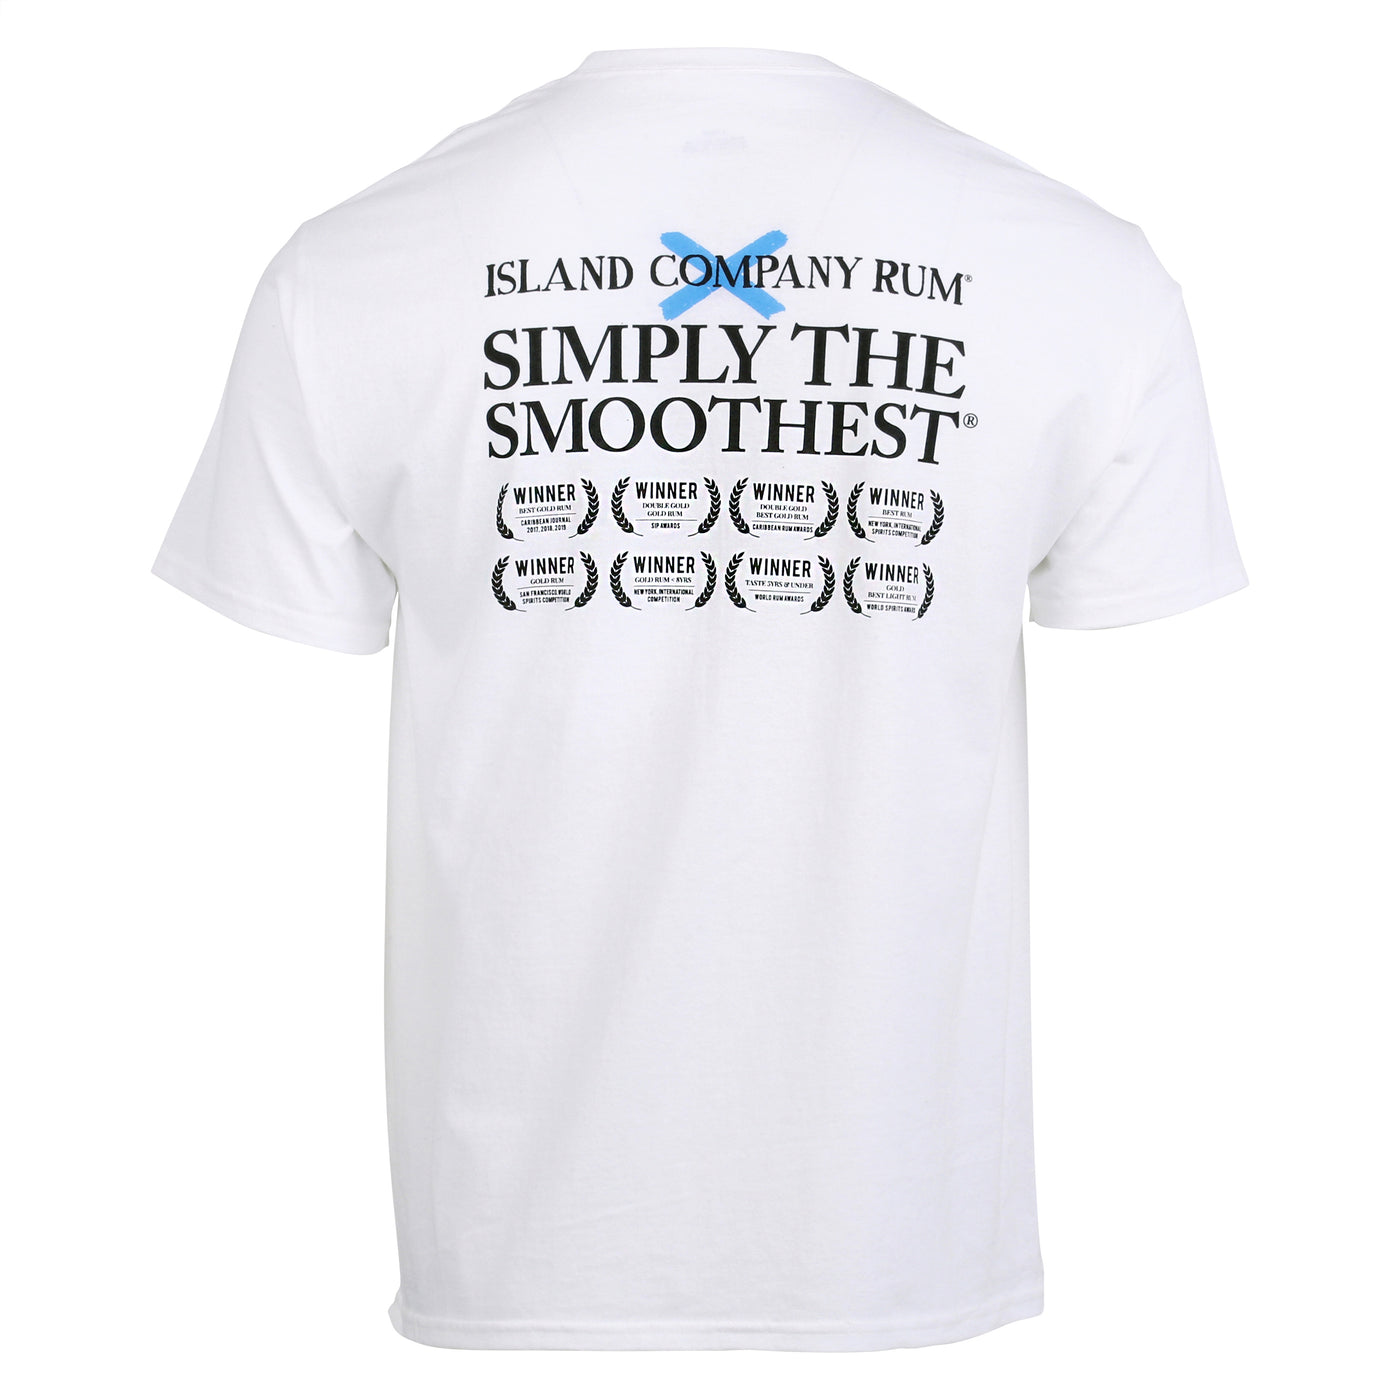 Simply The Smoothest® - Island Company Rum - Unisex Tee Shirt - White | Best tasting rum | Buy rum online | islandcompanyrum.com